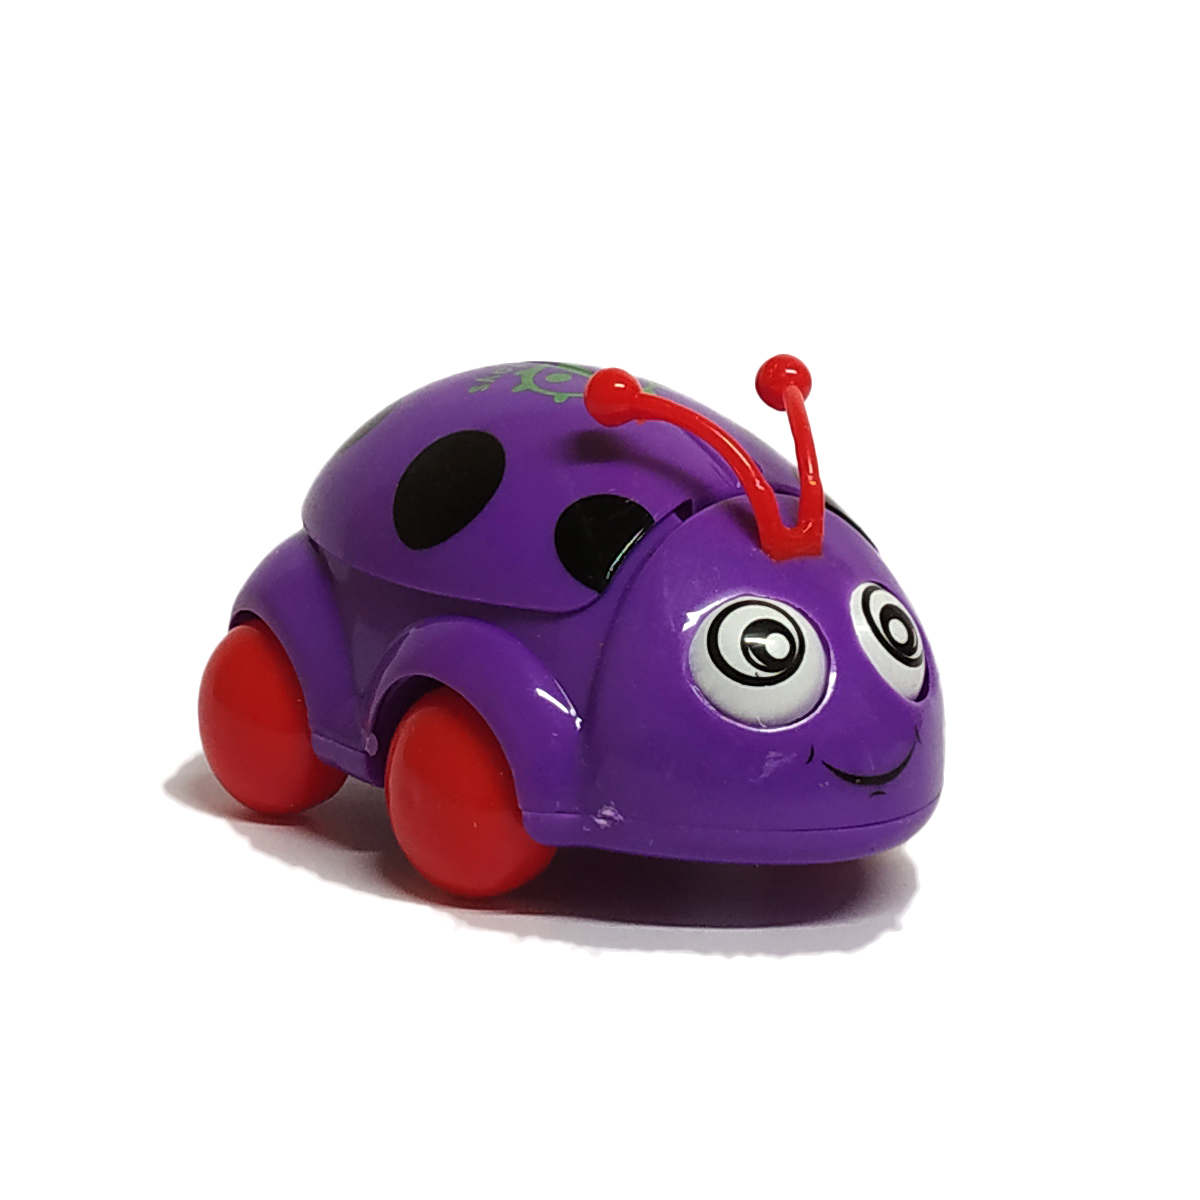 Car Beetle Funny Toys - Purple